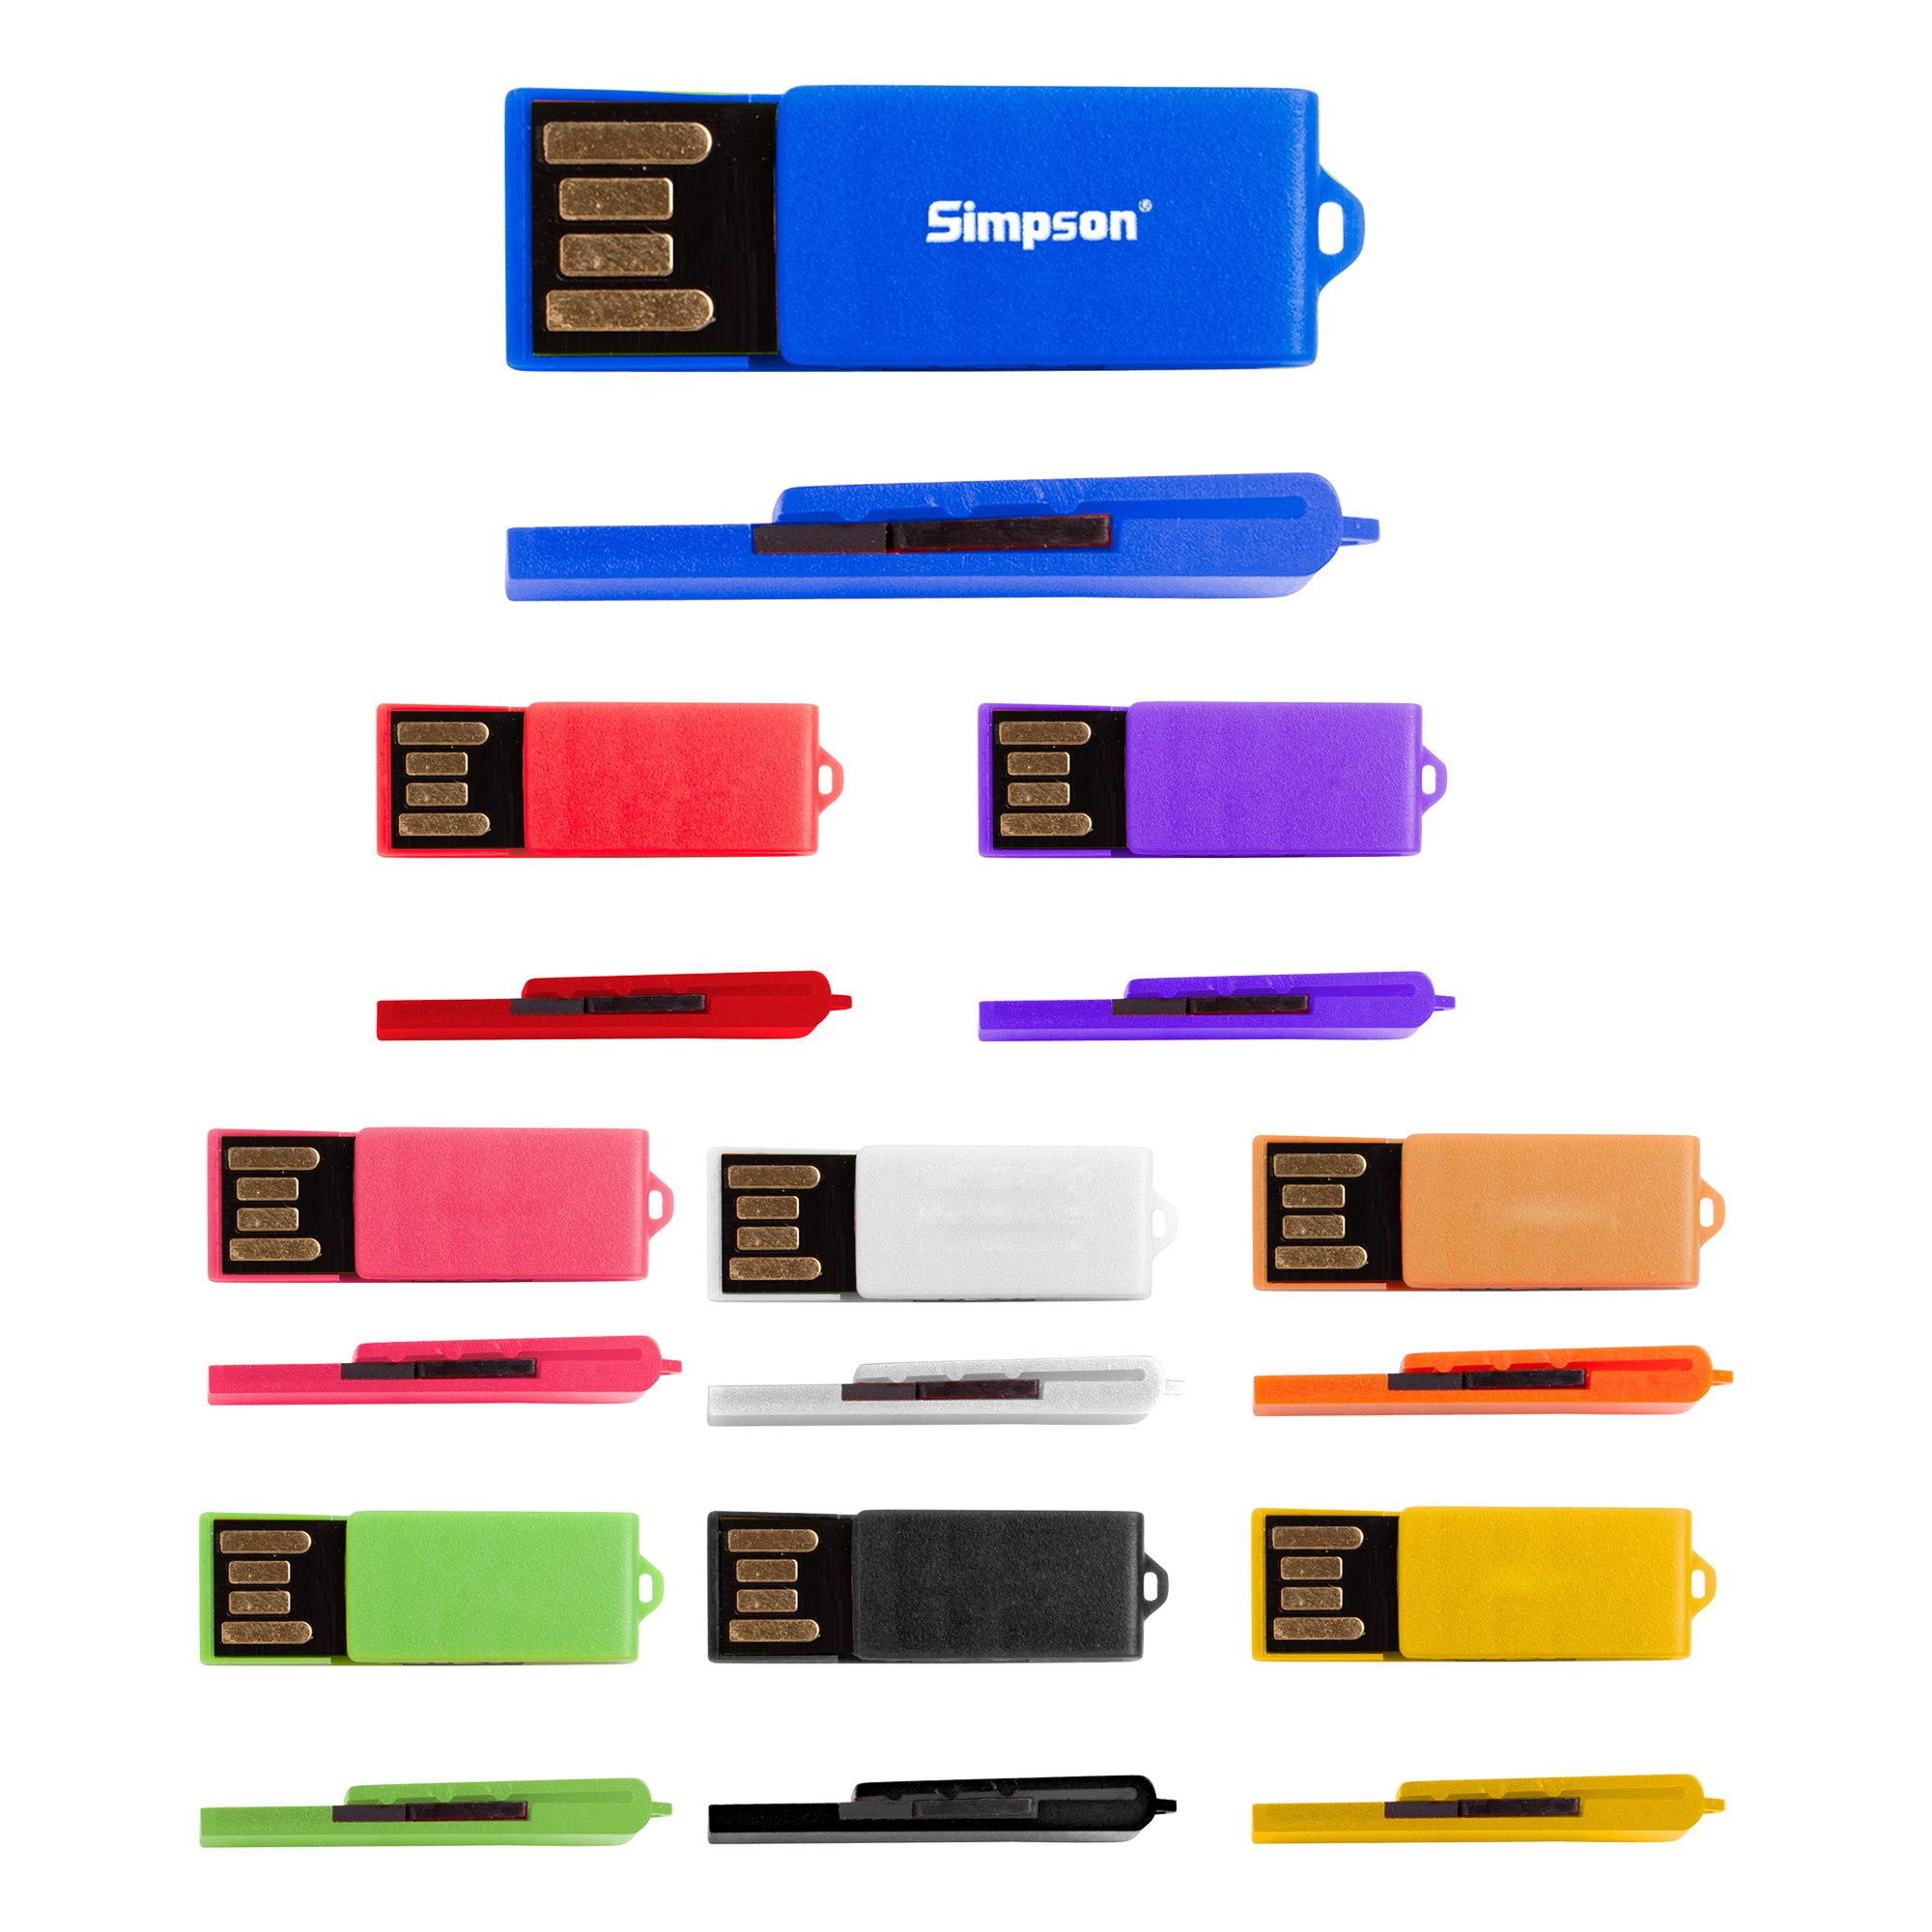 Mini Clip 16GB USB Drive with Company Logo Featured Image